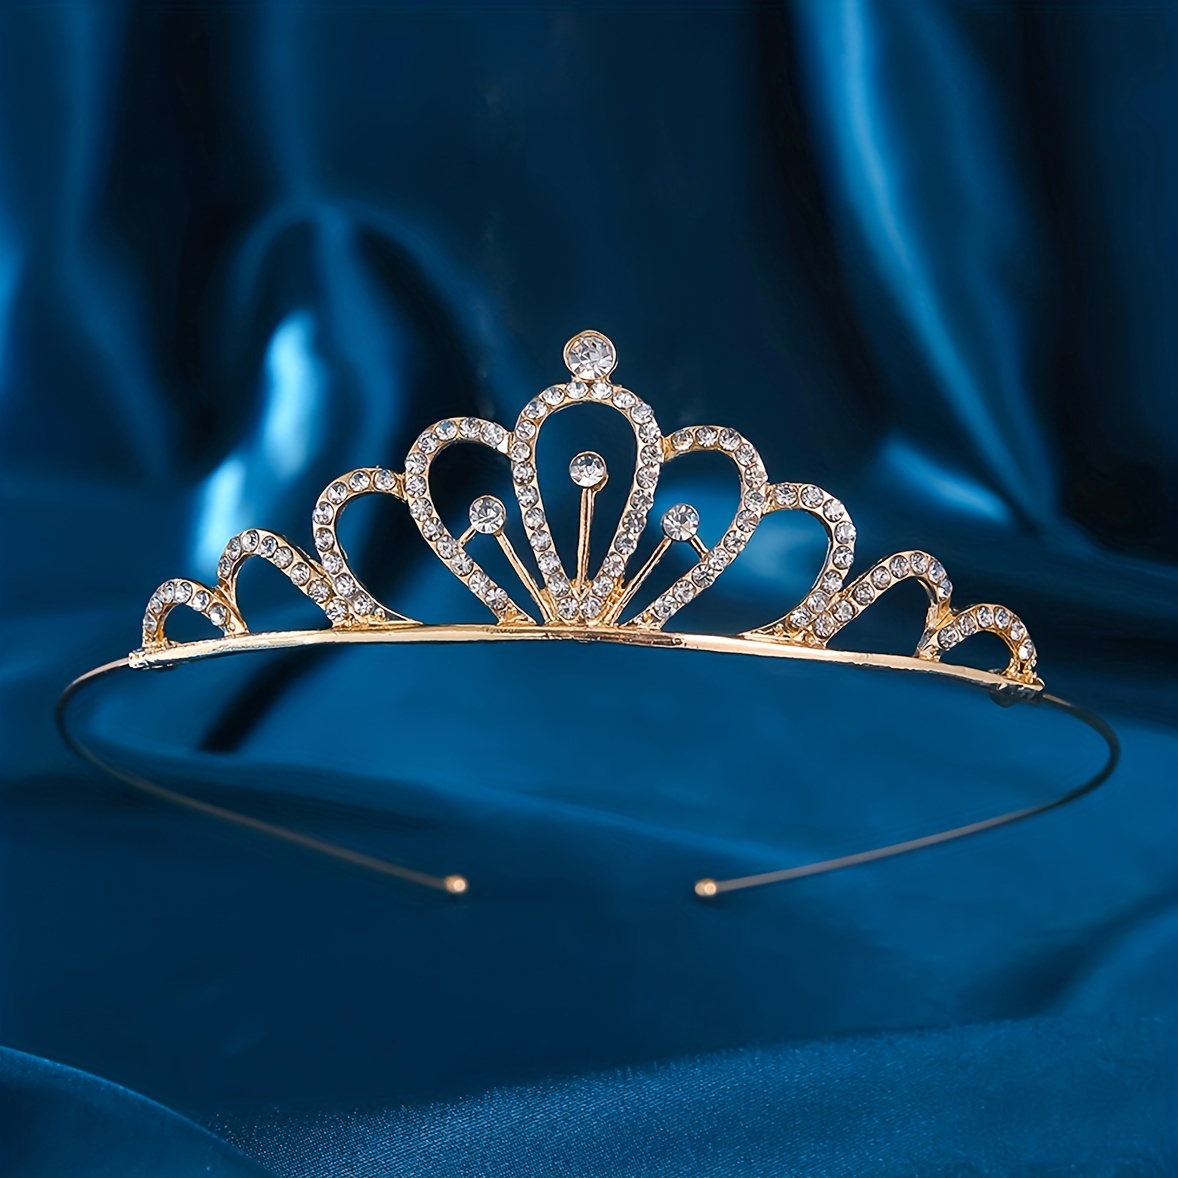 North American Fashion Accessories Jewelry Rhinestone Crown